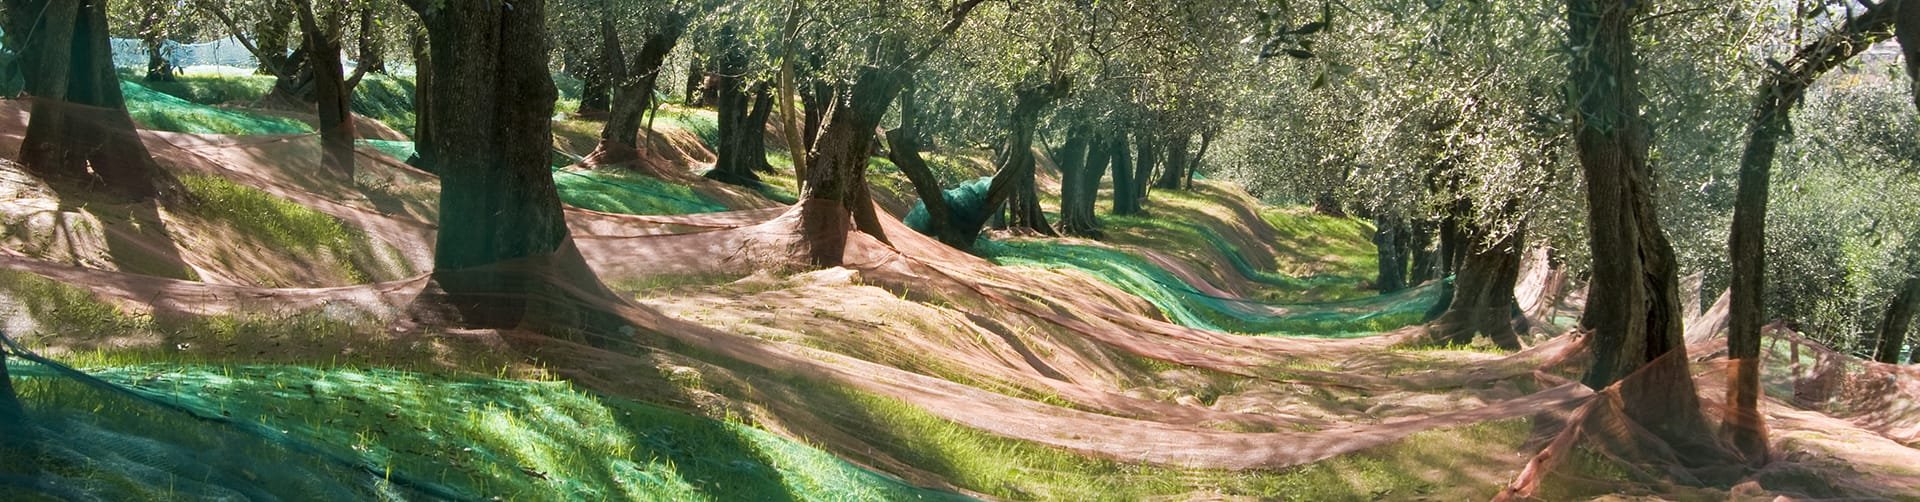 Reti raccolta olive